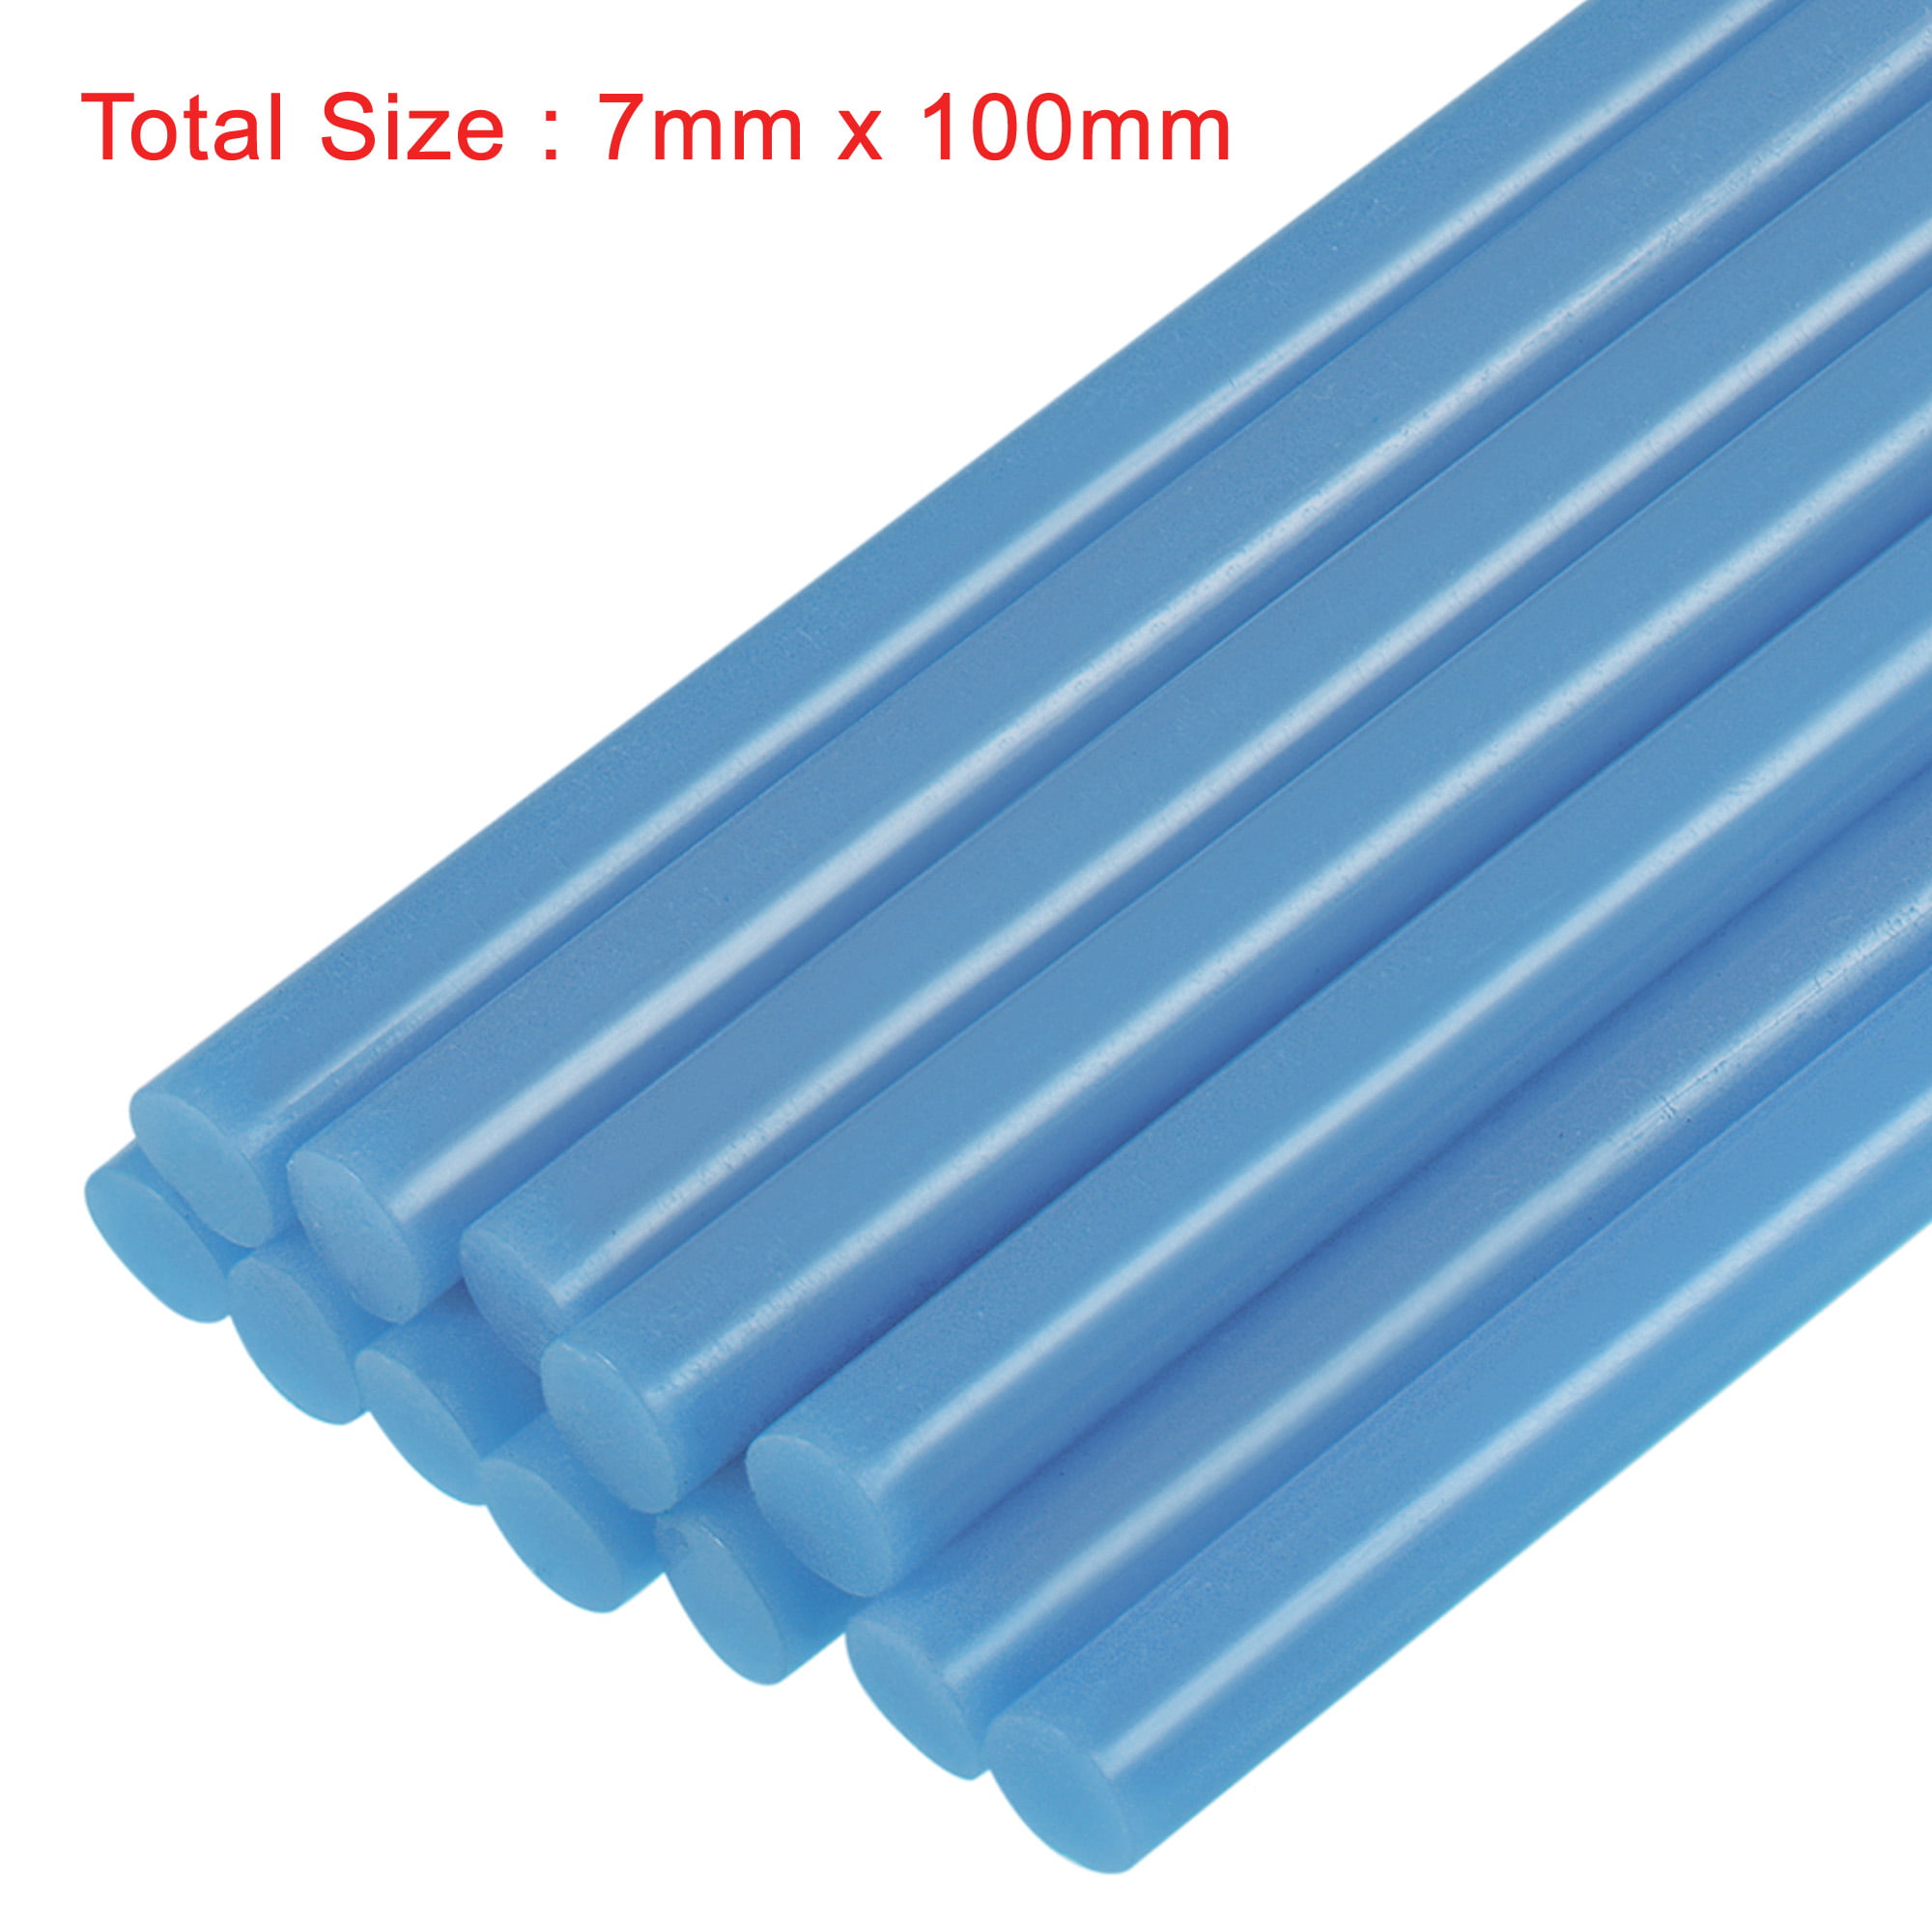 SHALL Mini Hot Glue Sticks, 0.27” Dia x 4” Long, 220-pack Clear